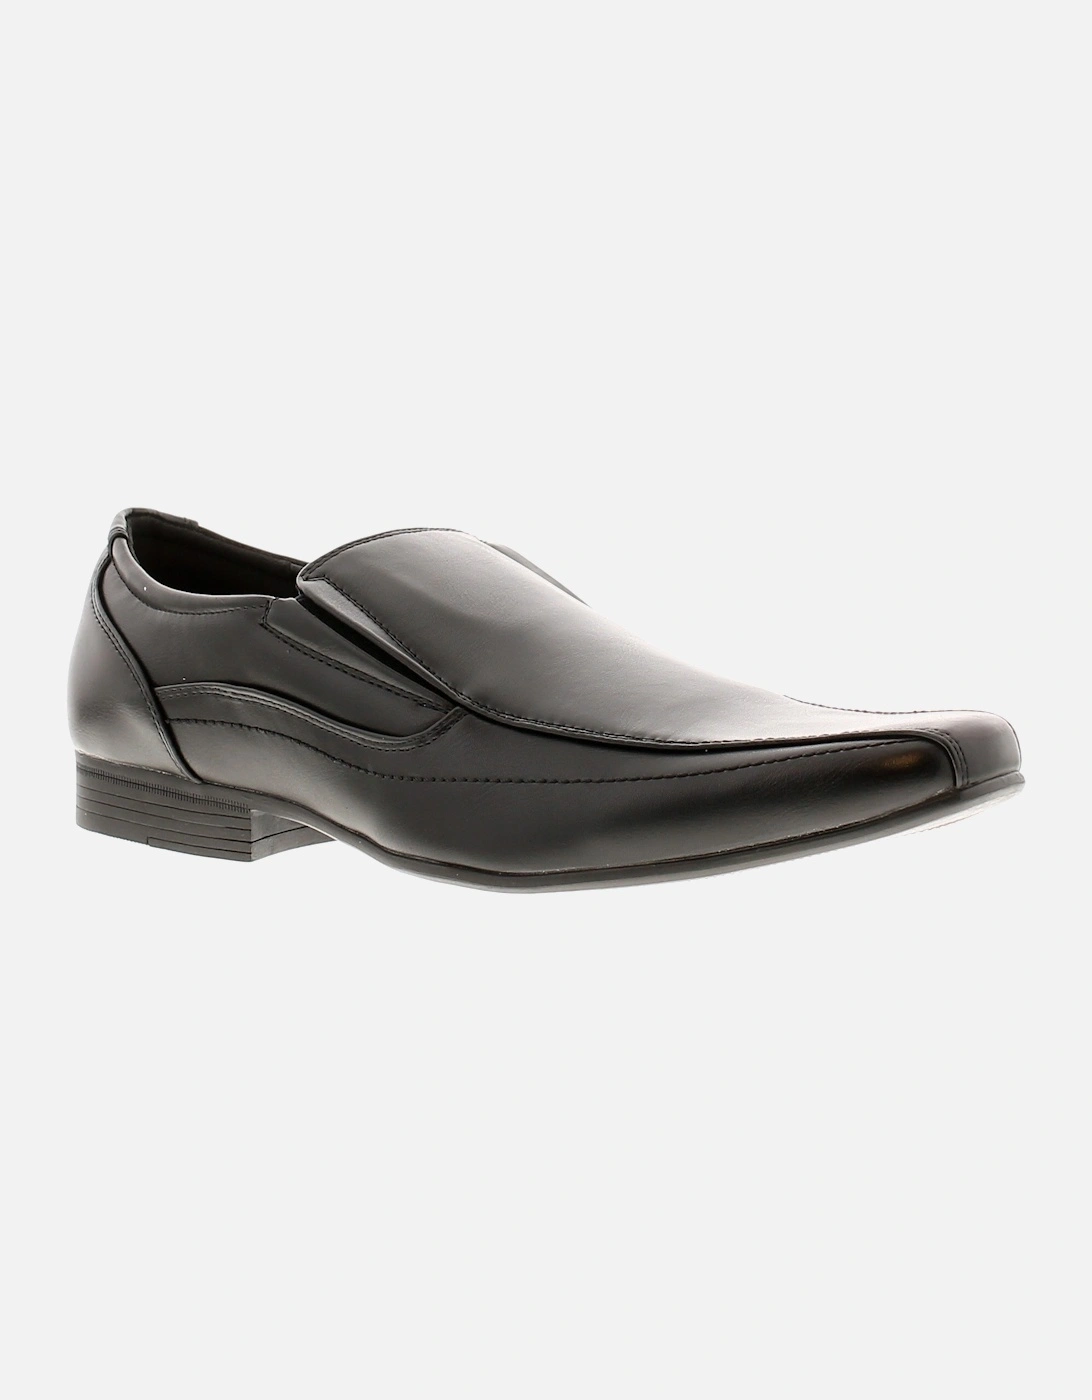 Mens Shoes Casual Klerk black UK Size, 6 of 5